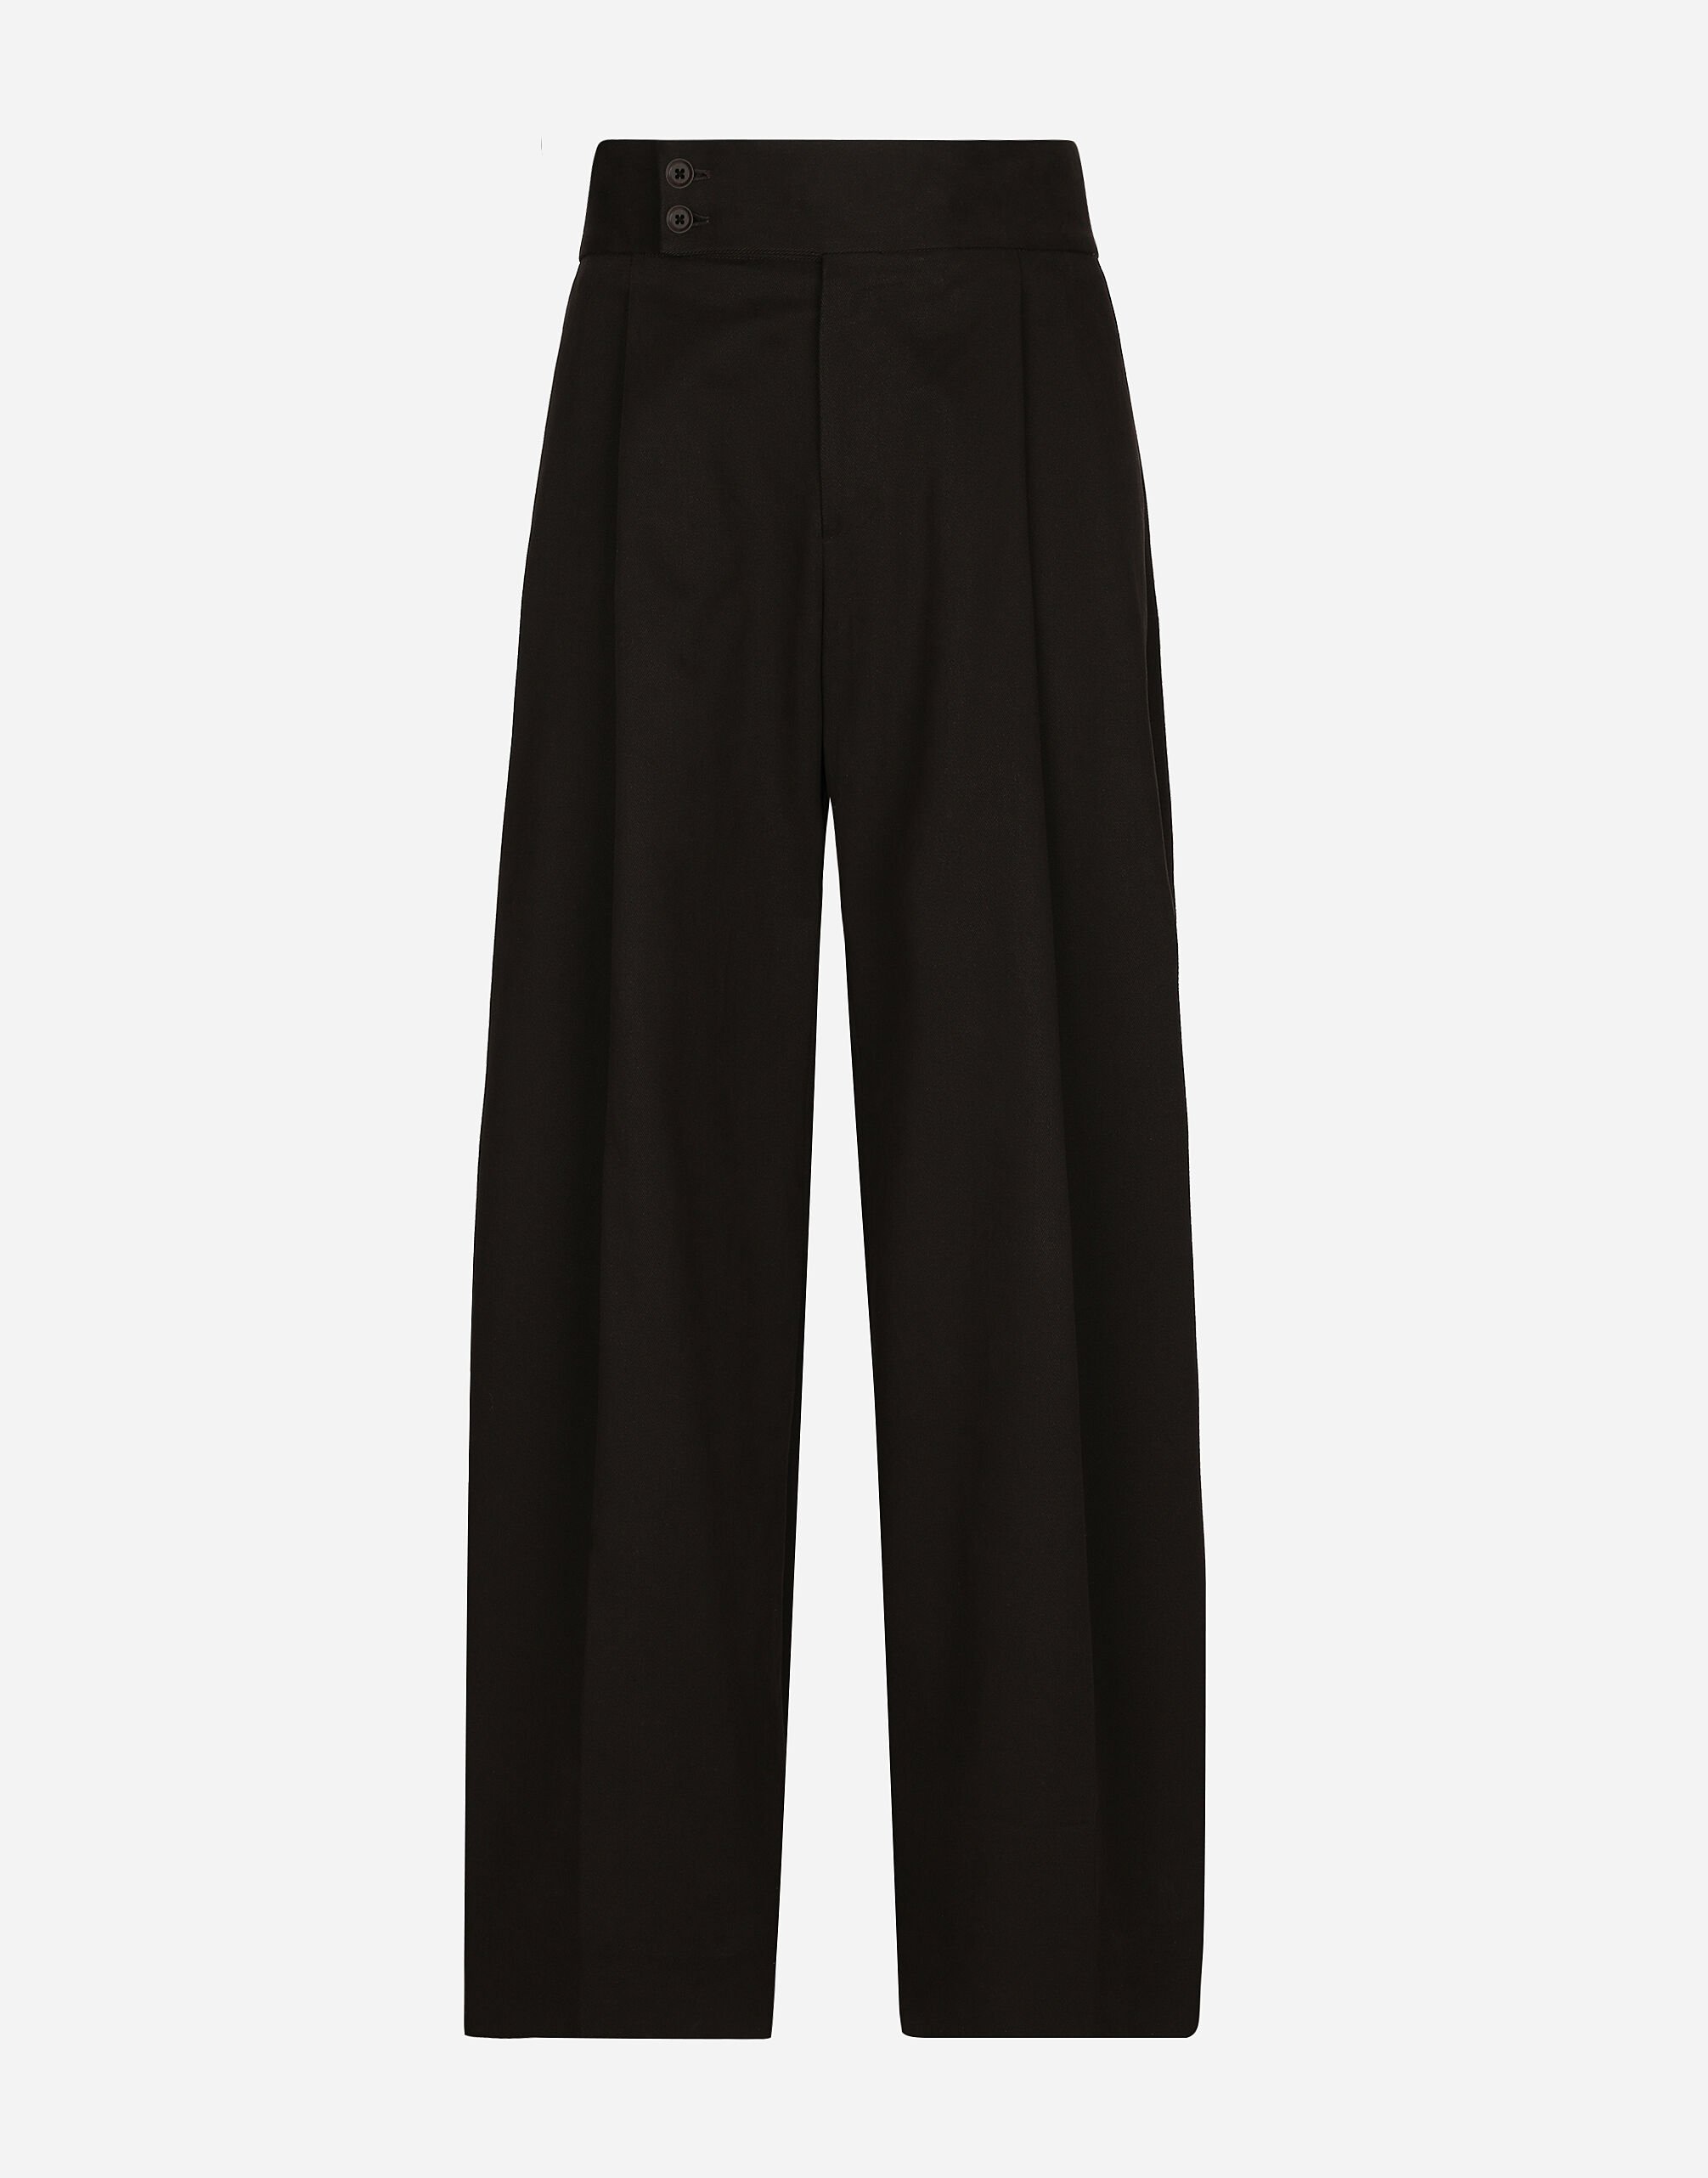 Dolce & Gabbana Tailored cotton pants with darts Brown GP01PTFU60L